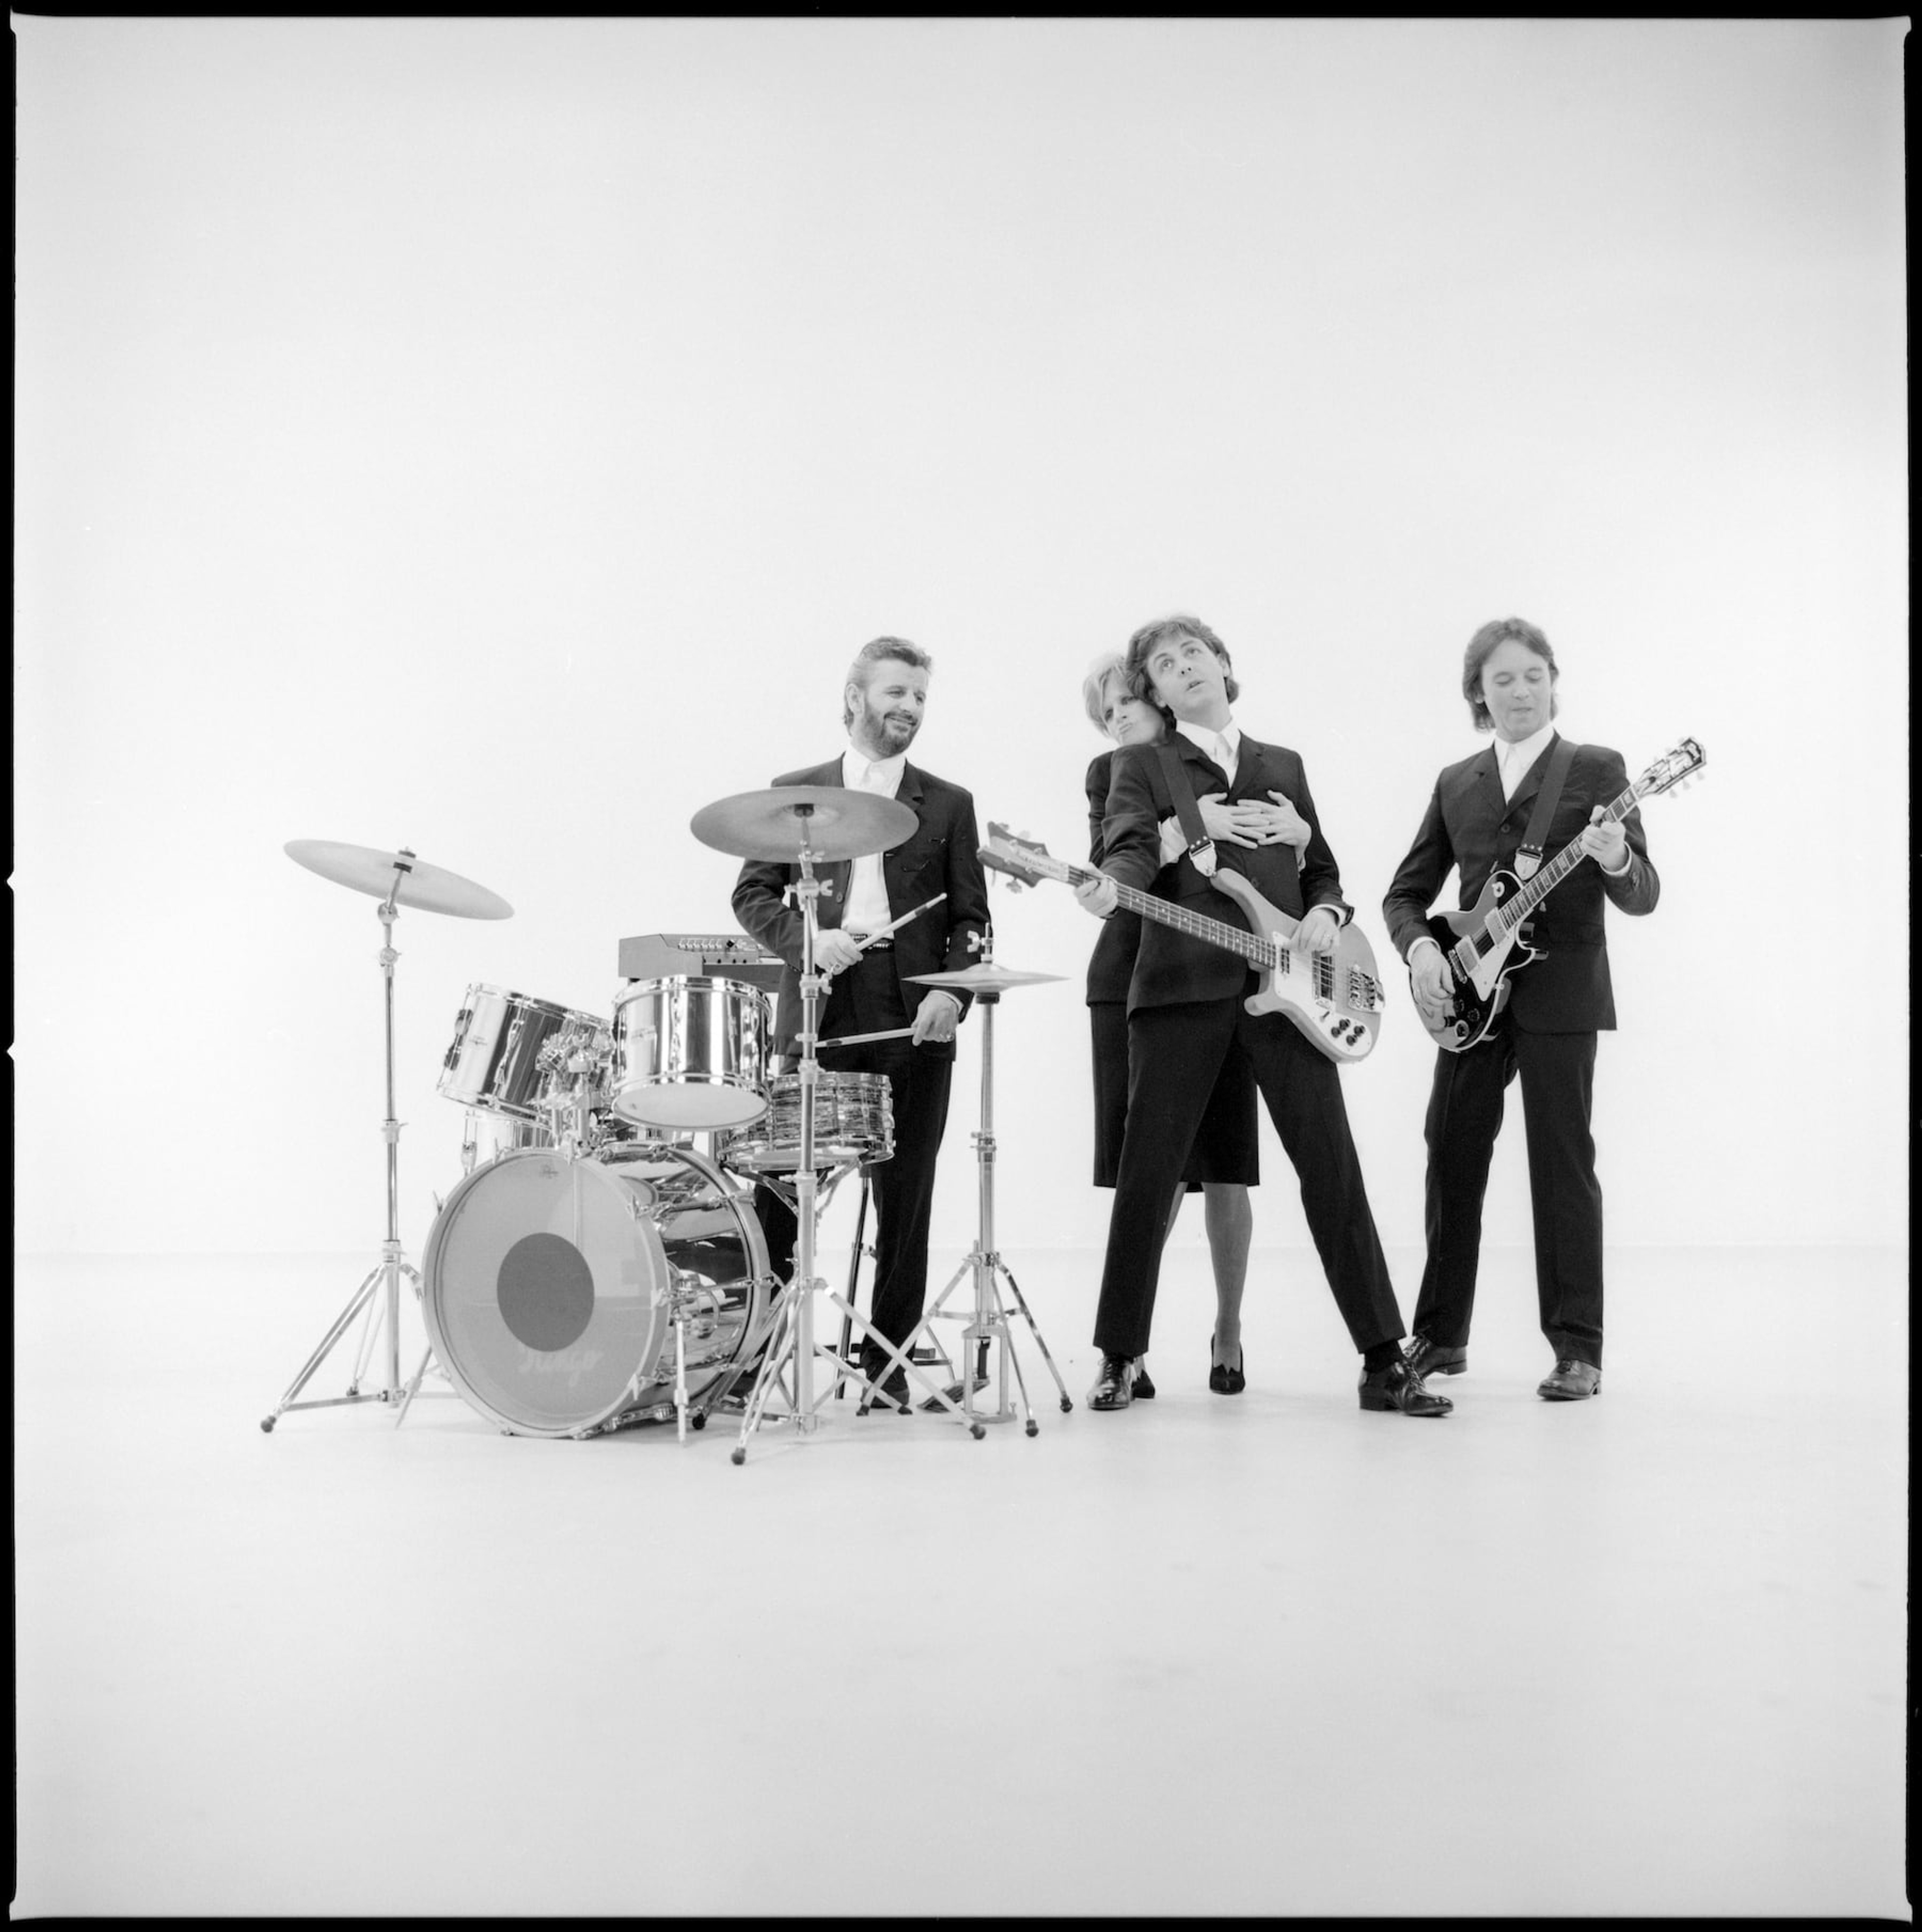 Photo of Ringo Starr, Linda, Paul and Eric Stewart at the 'So Bad' studio shoot. 